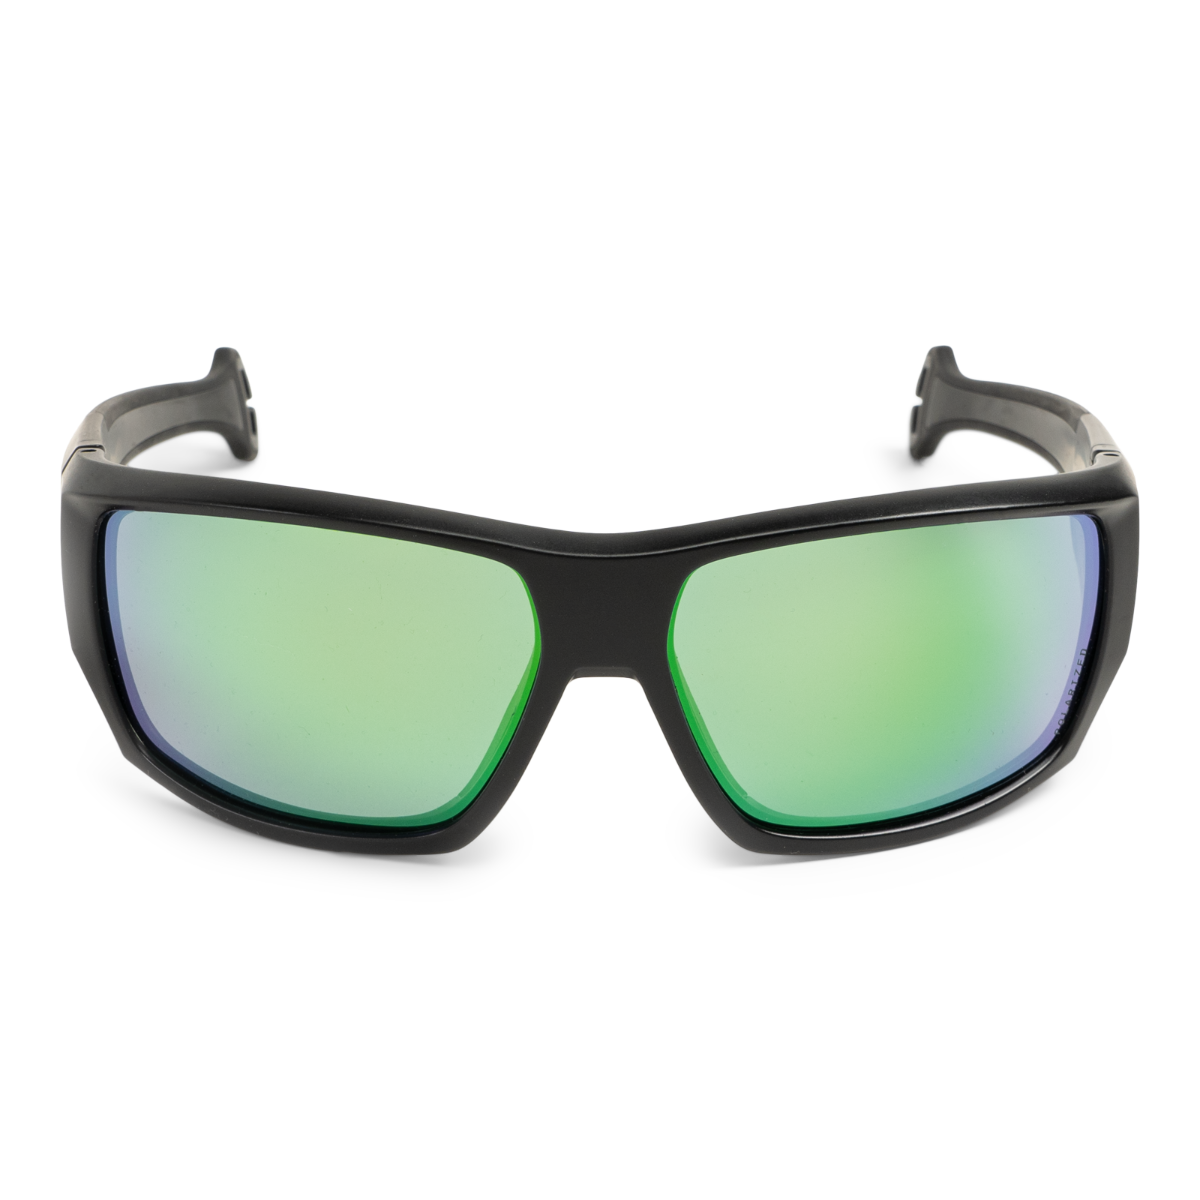 Sea-Doo Floating Polarized Wave Sunglasses